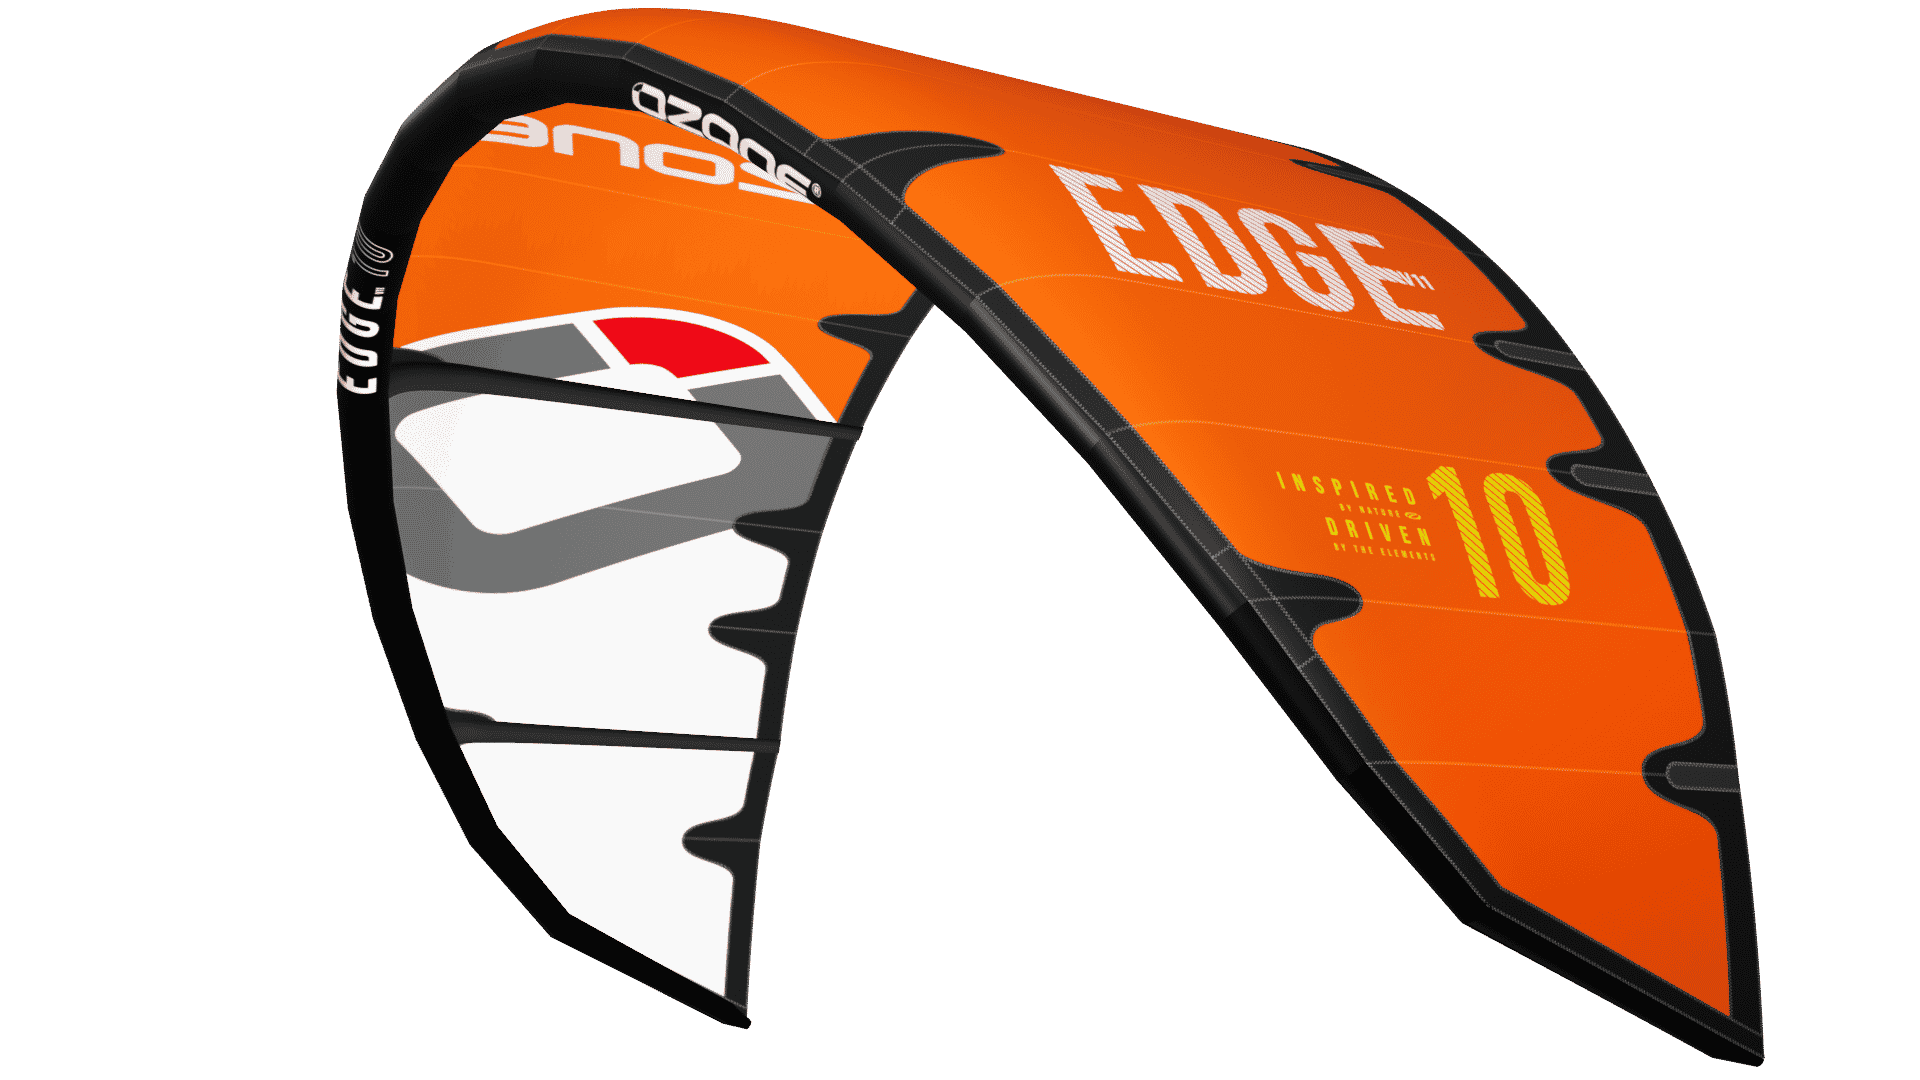 Ozone Edge V11 Orange, ozone Kites Edge, Edge Ozone